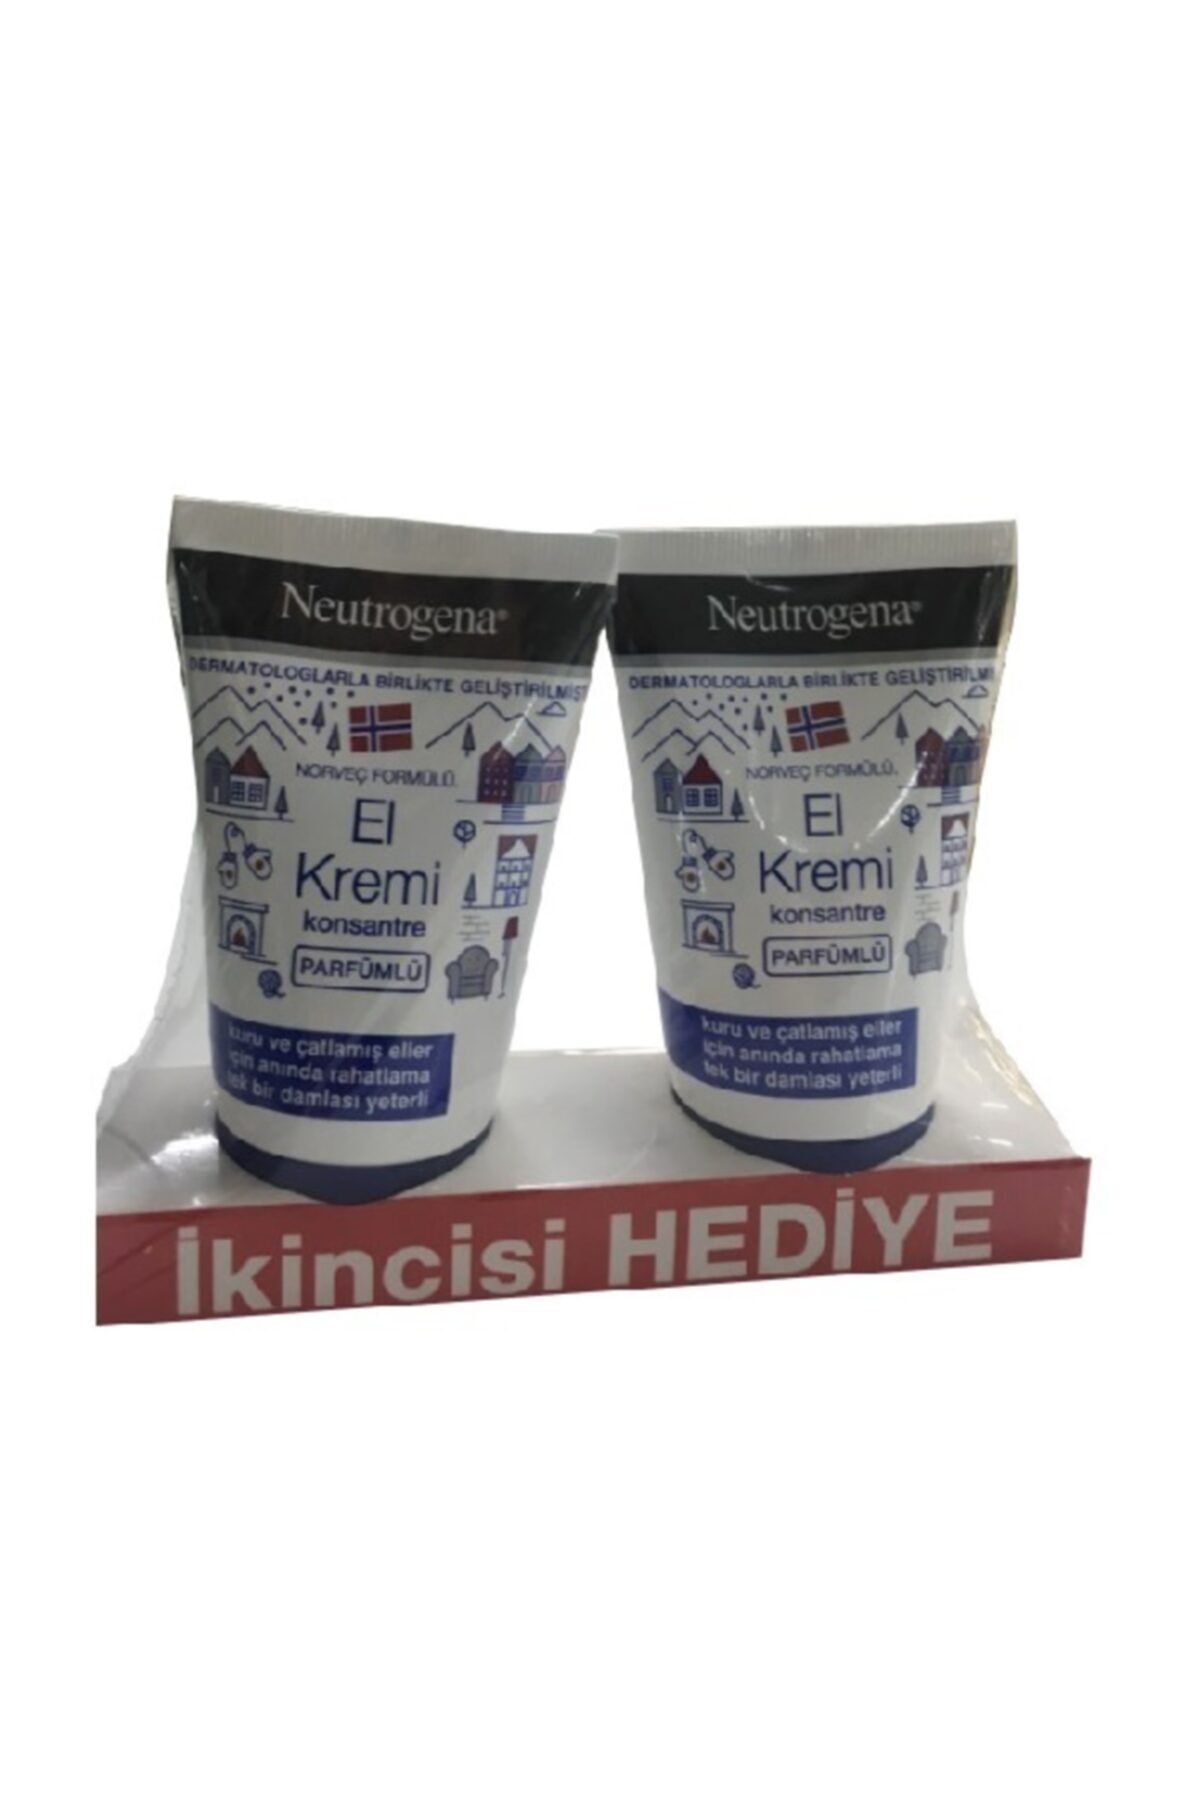 Neutrogena Parfümlü El Kremi 50 ml + Ikincisi Hediye